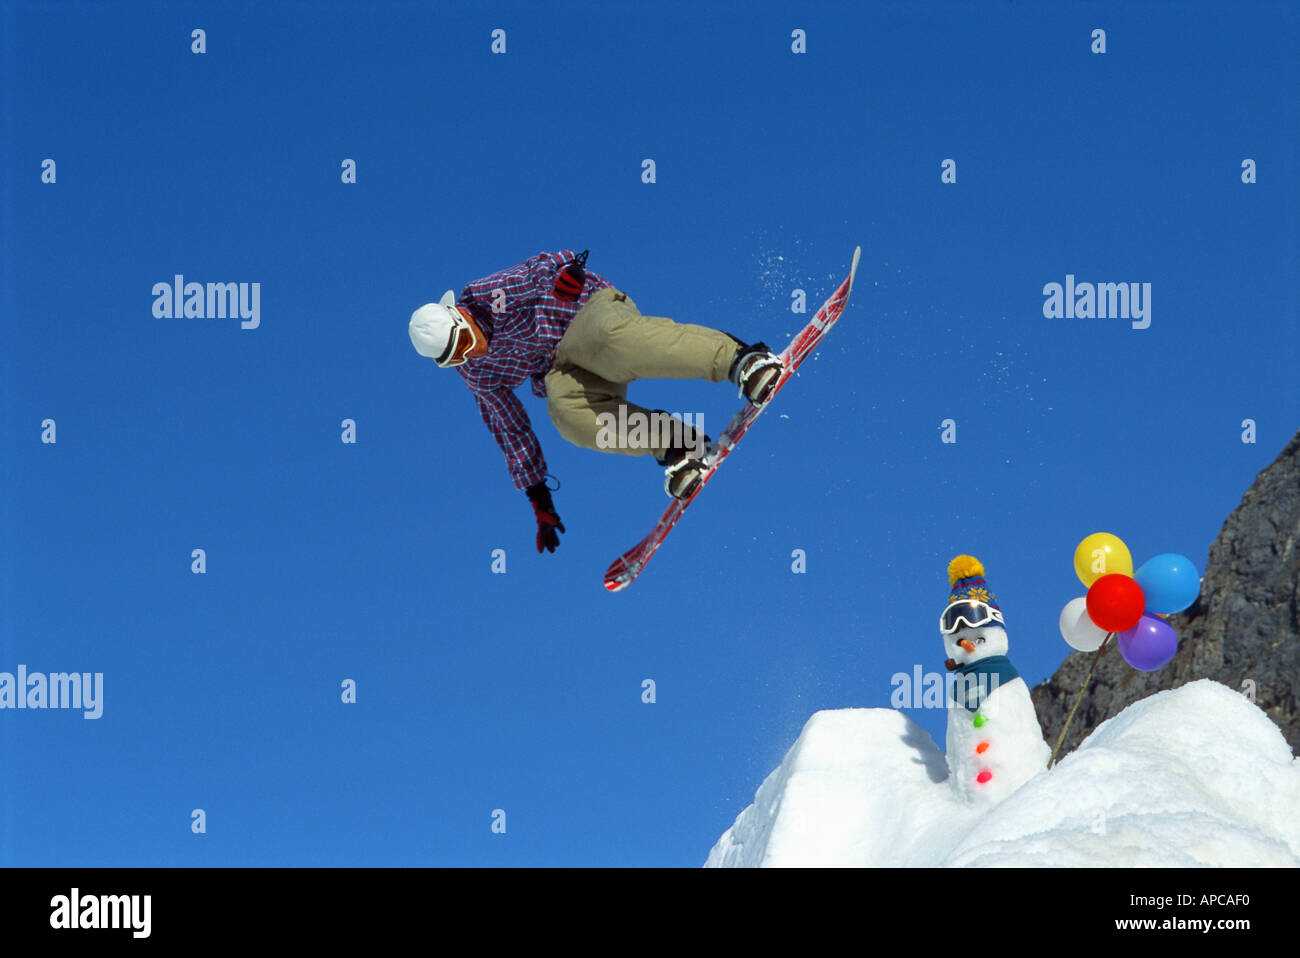 Sport Winter Sports Snowboarding Stock Photo